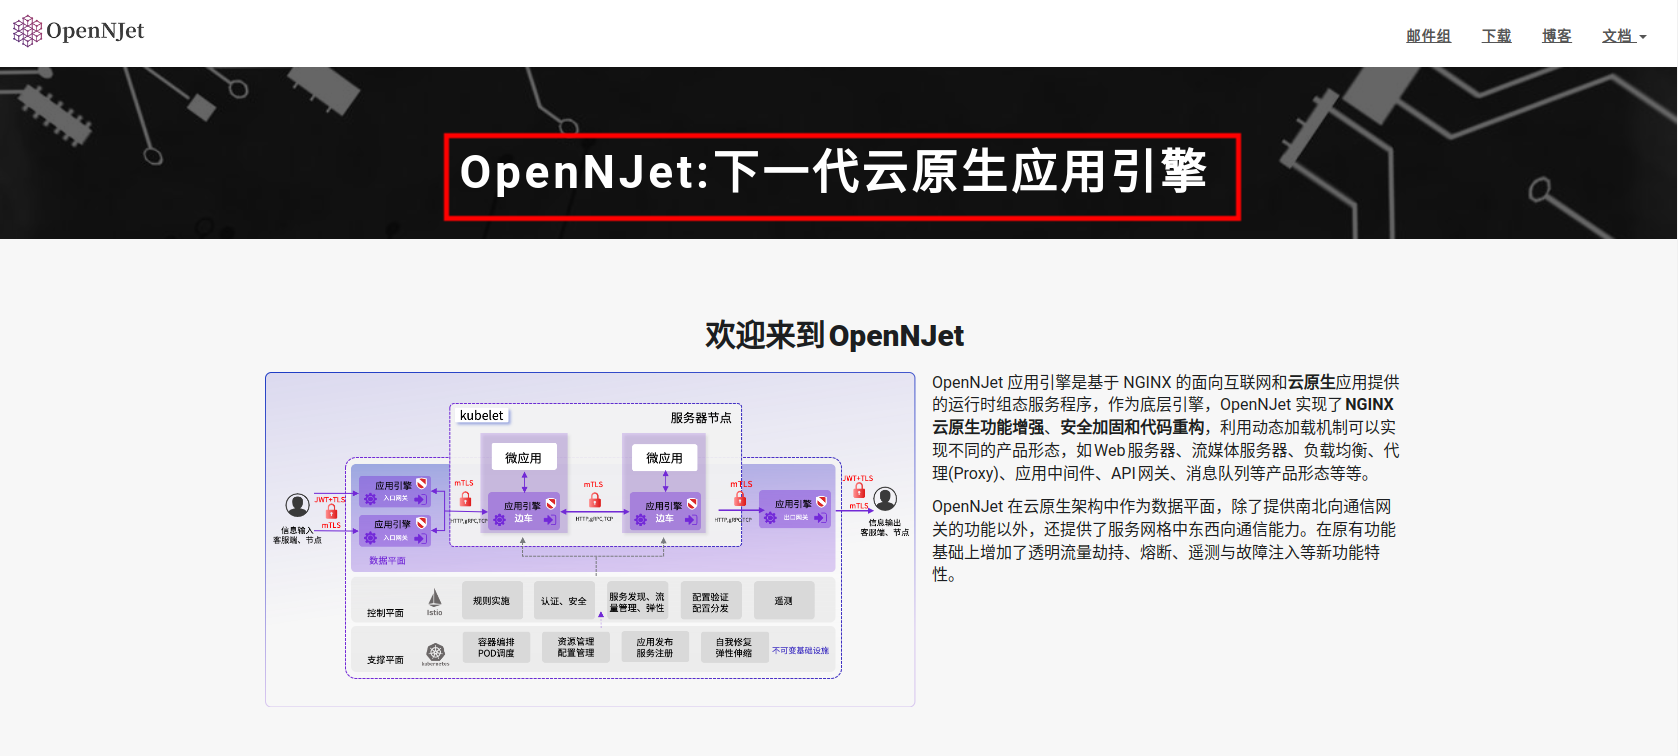 OpenNJet如何做到让用户永远在线